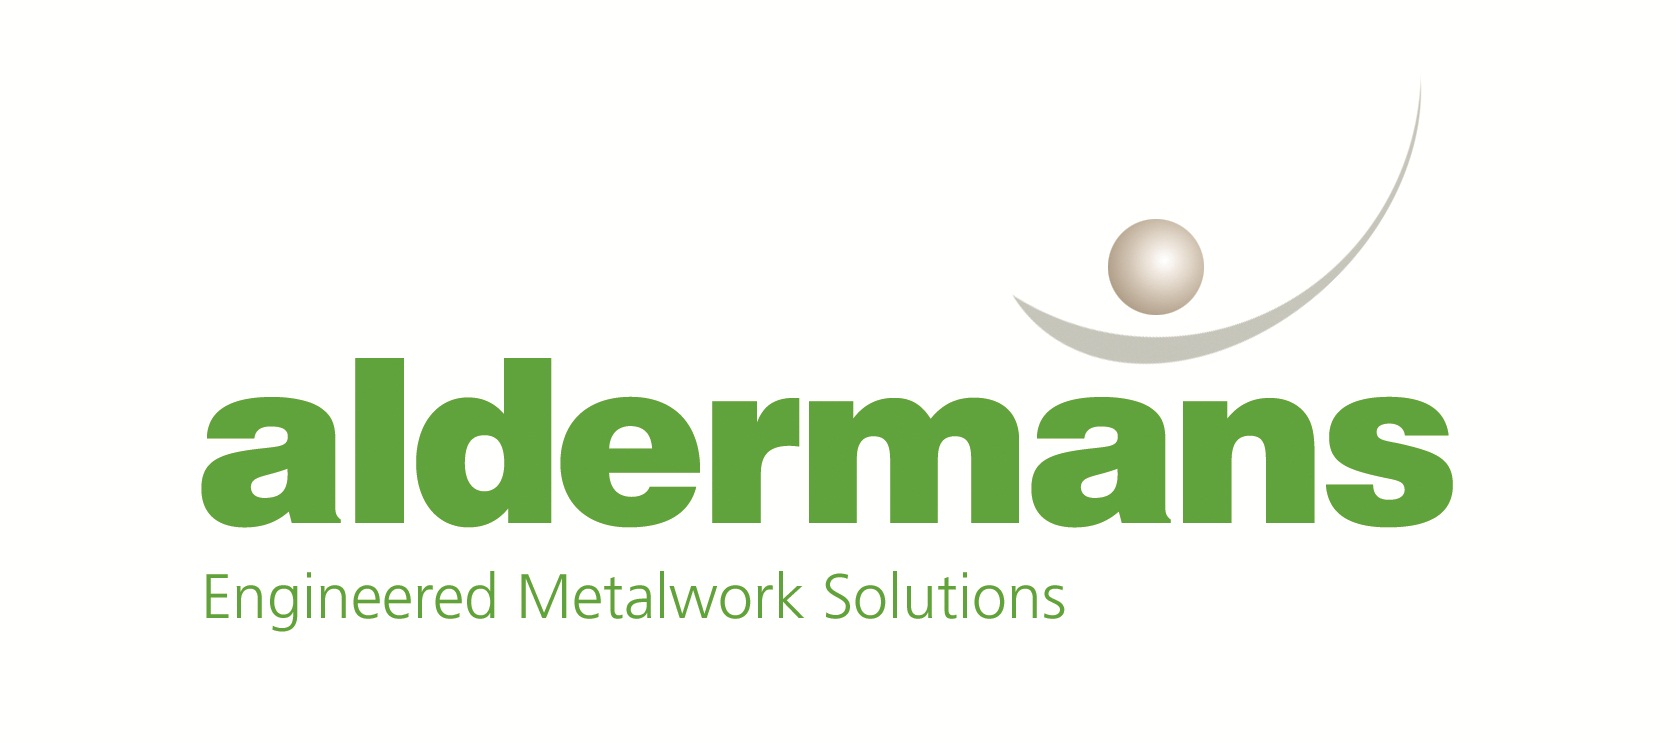 Alderman Tooling Ltd